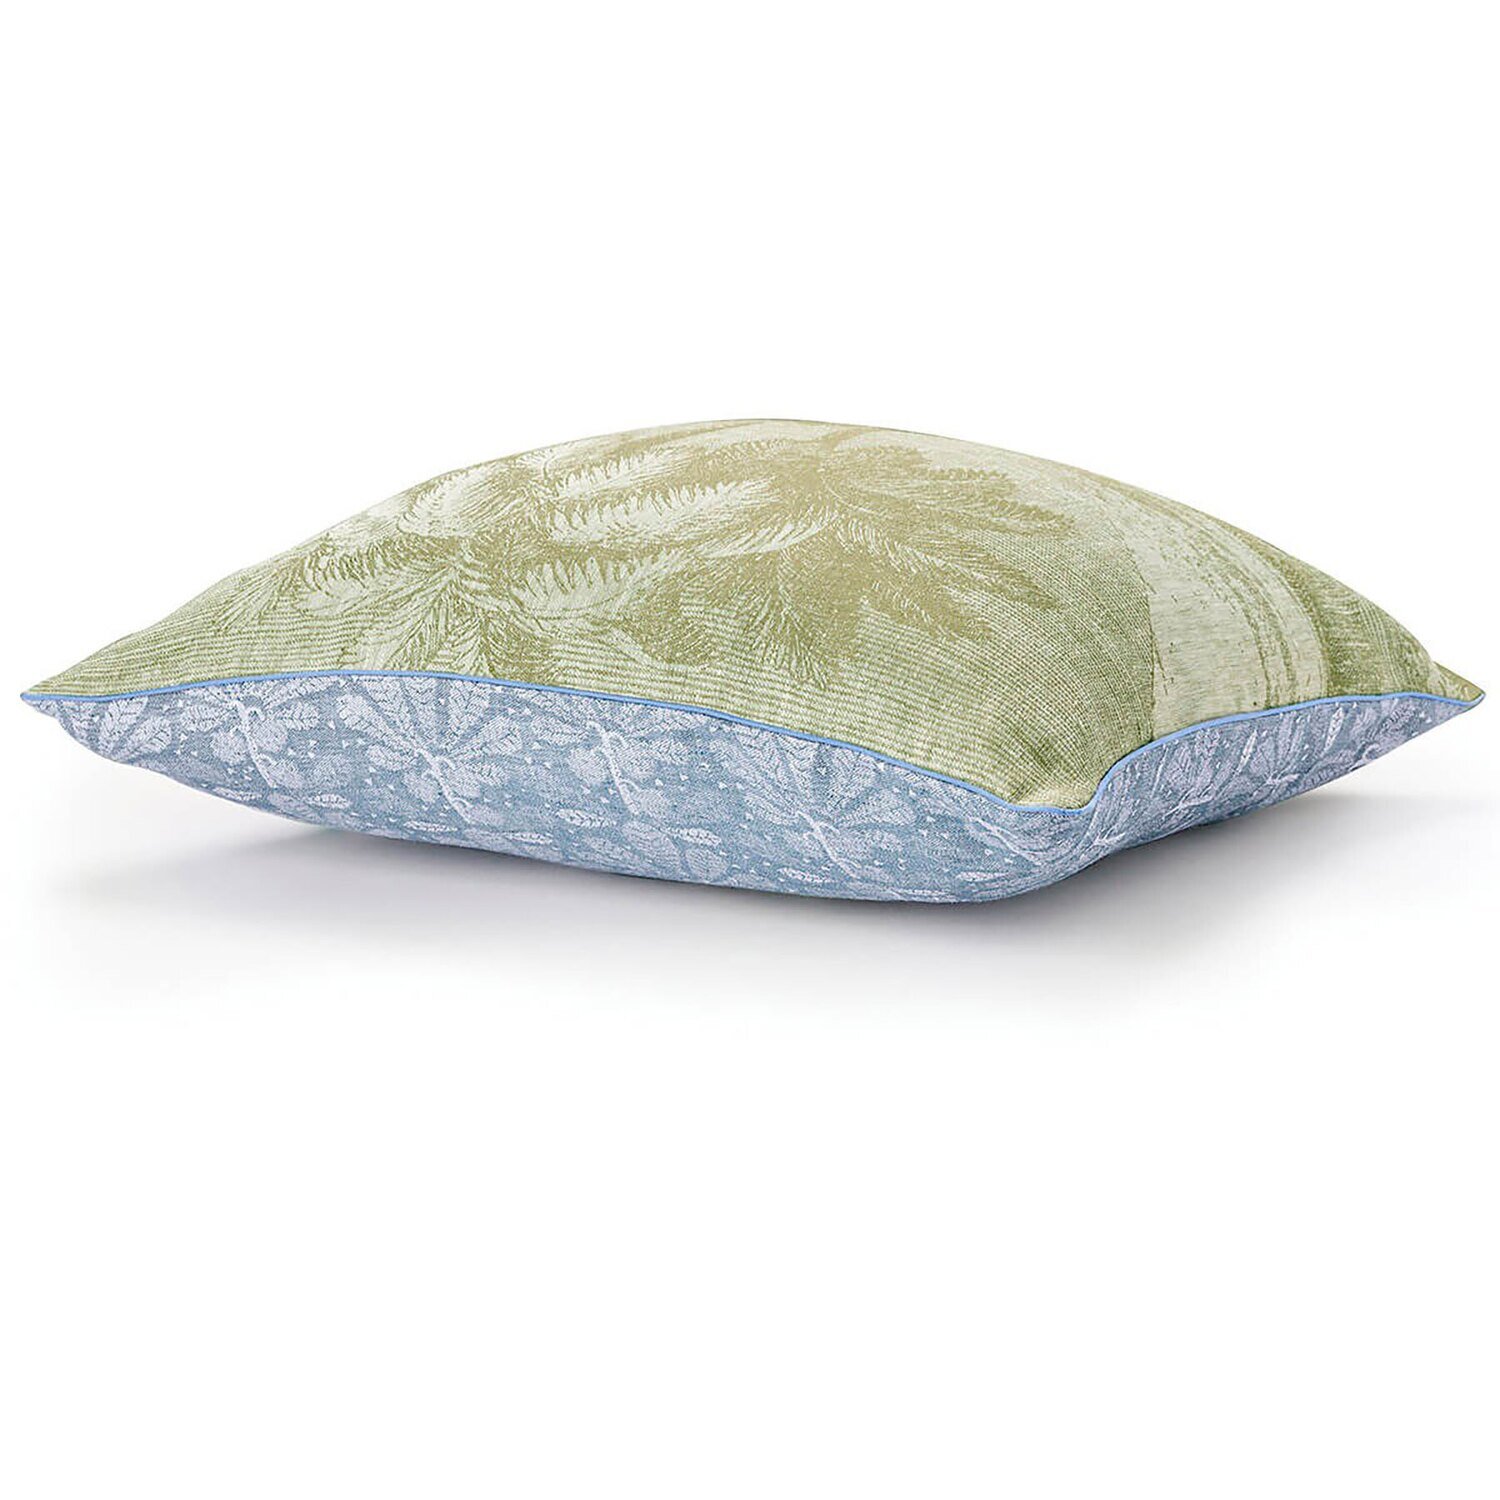 Le Jacquard Francais Cushion Cover Croisiere Nil Green 100% Linen 26916